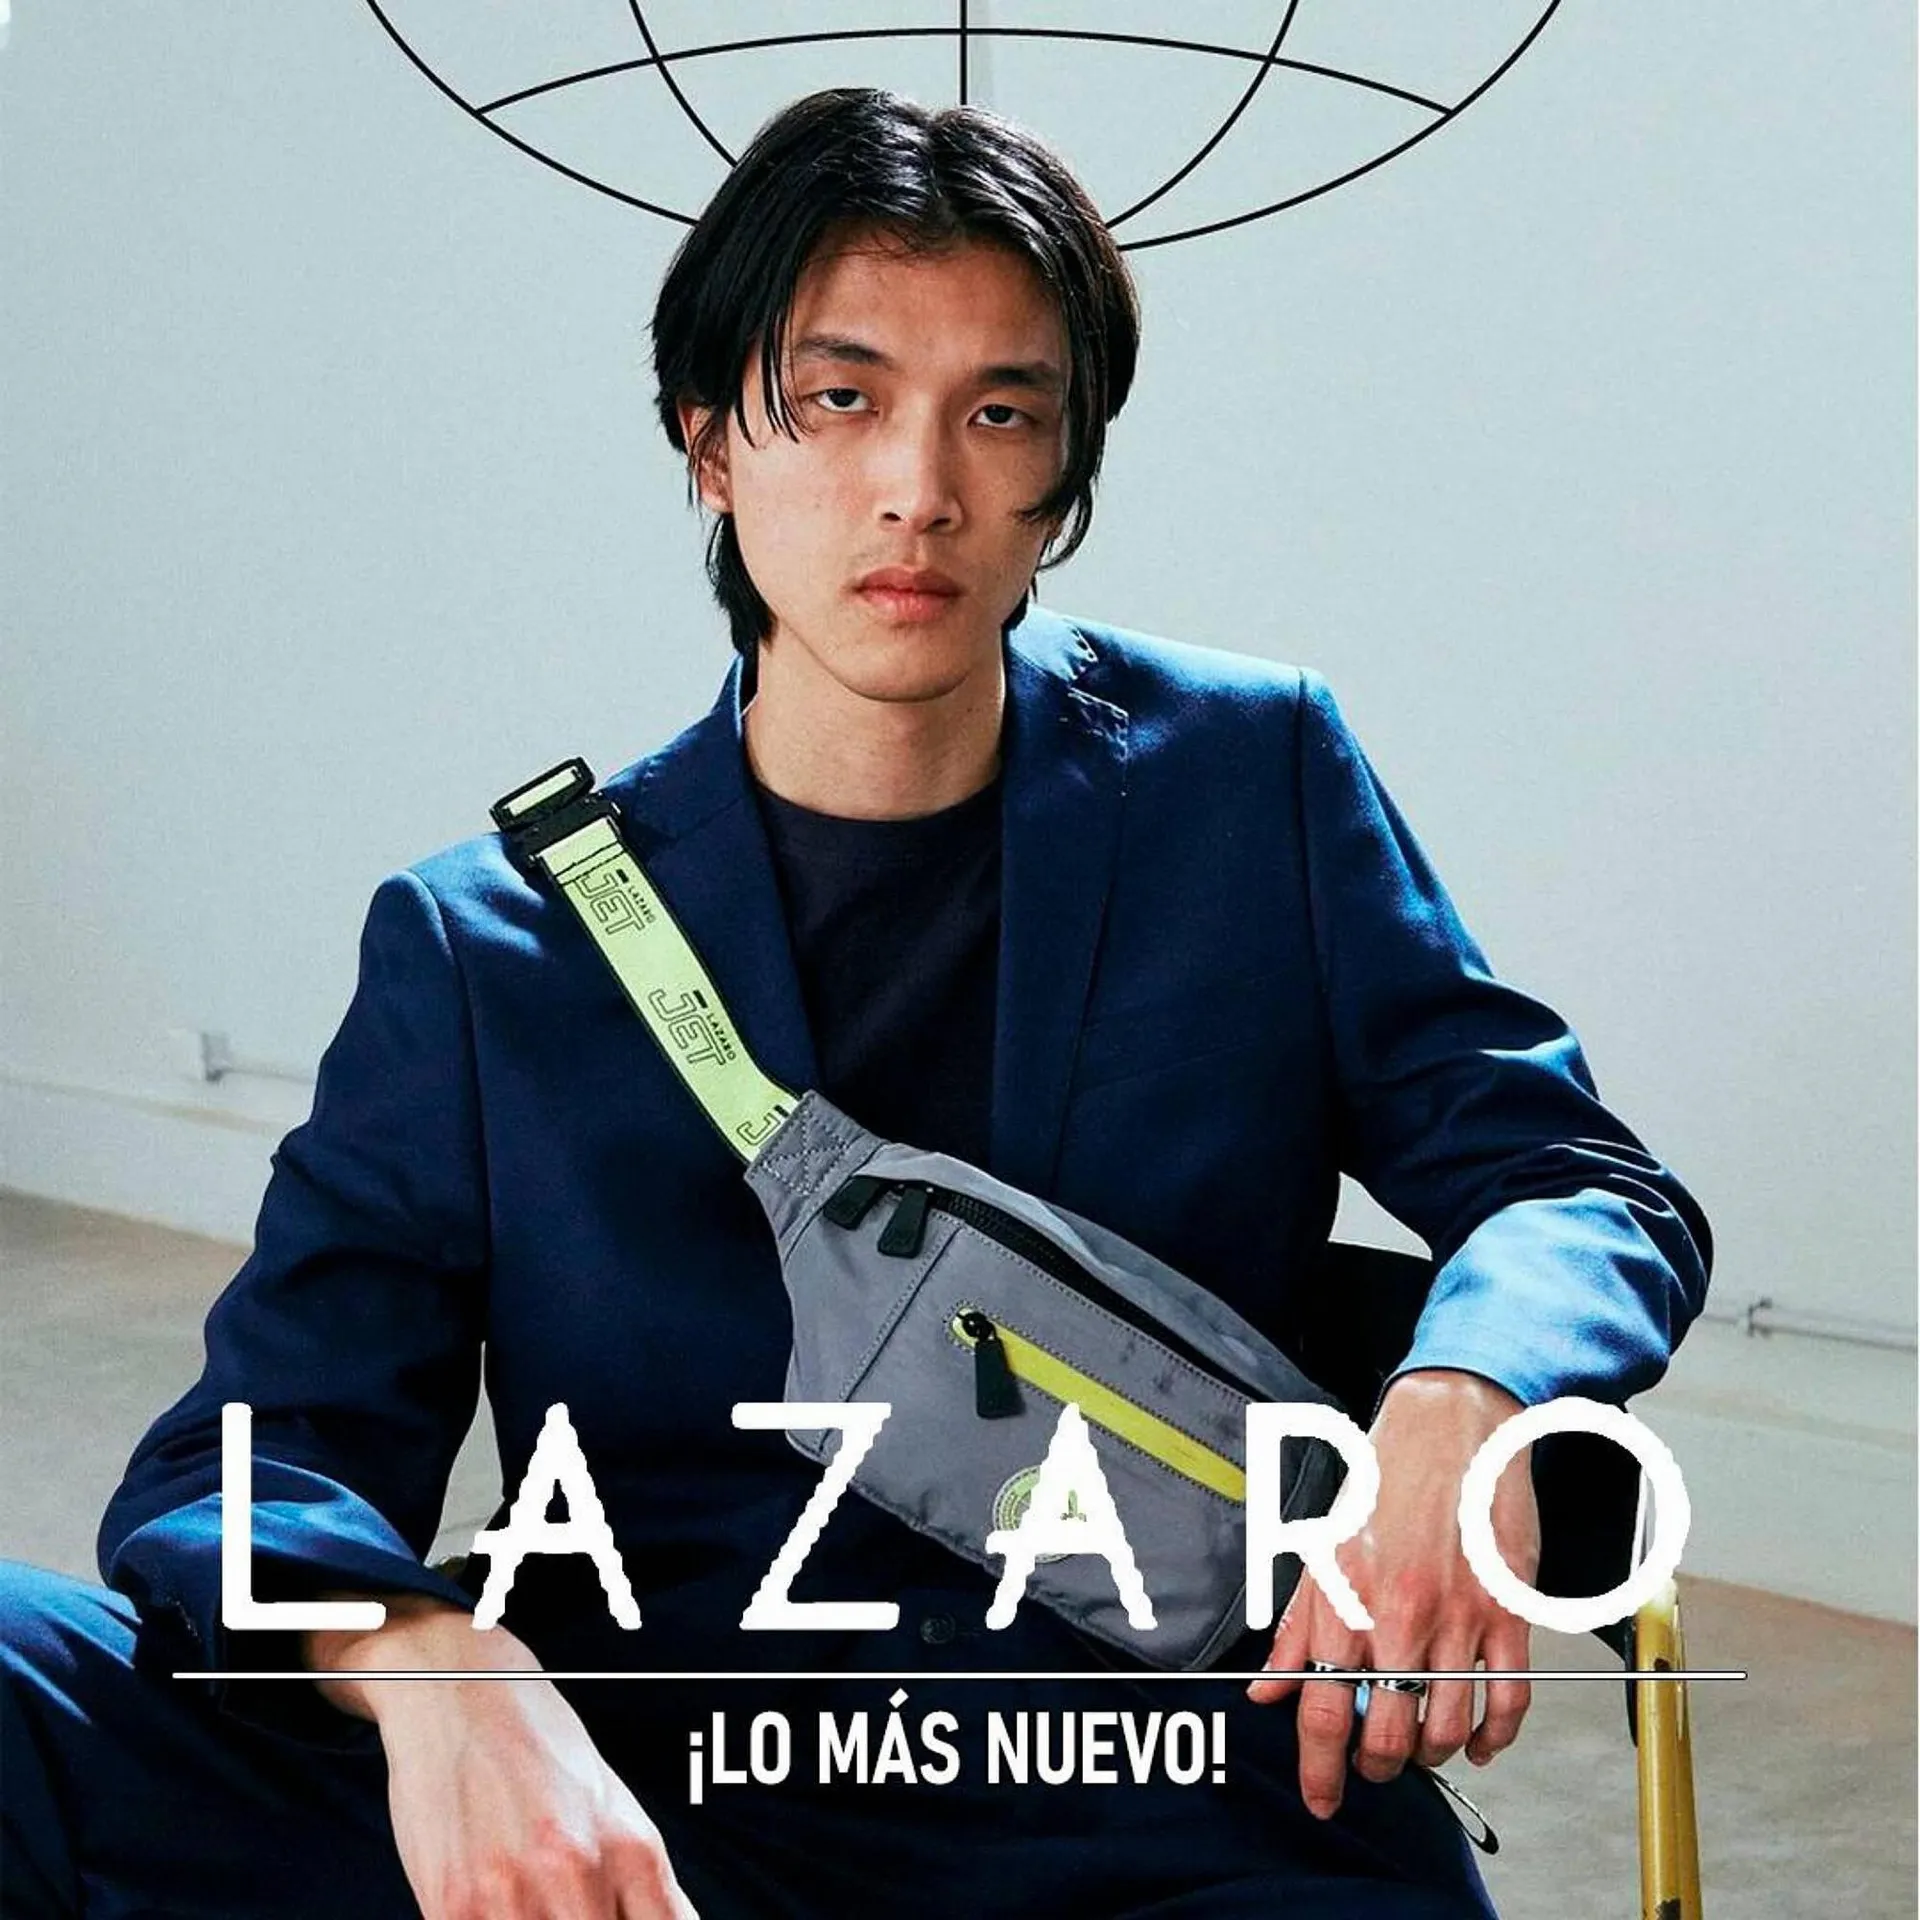 Catálogo Lazaro - 1